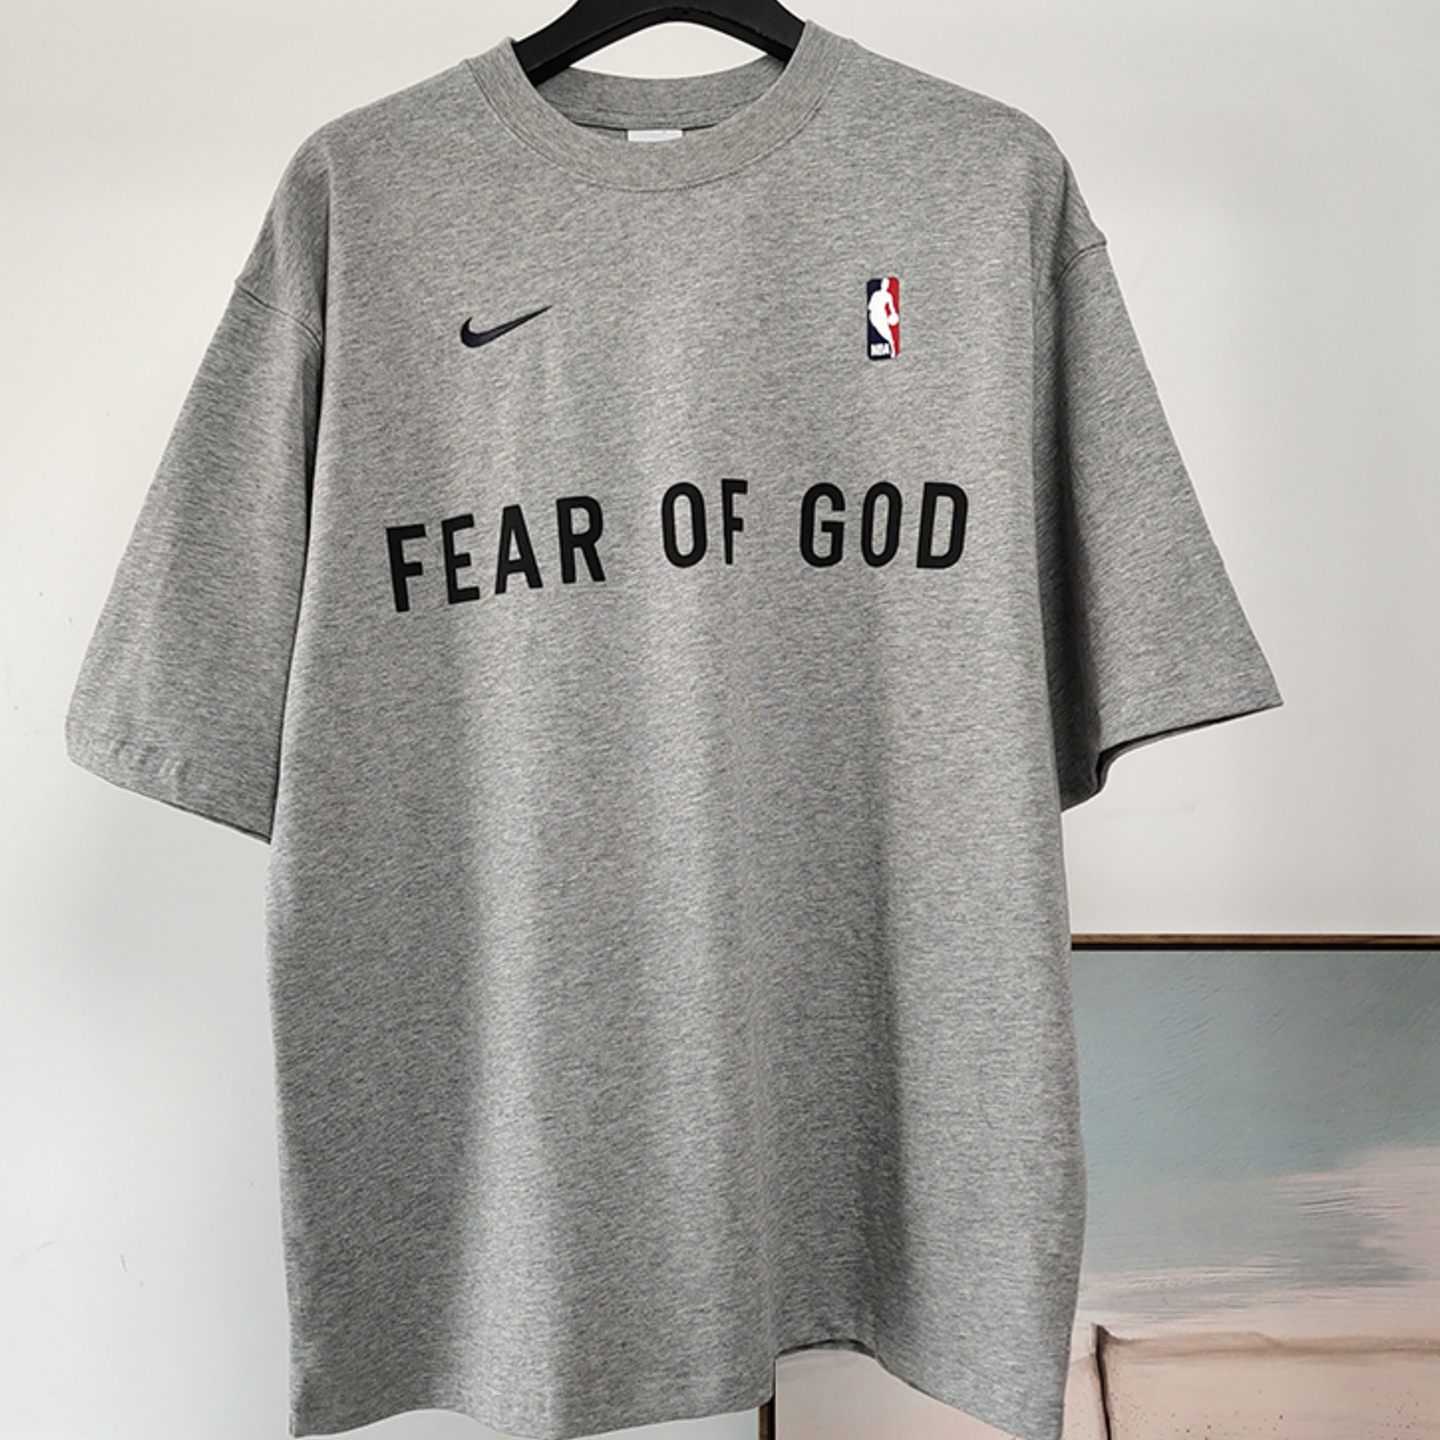 FEAR OF GOD x Nike Warm Up T-Shirt